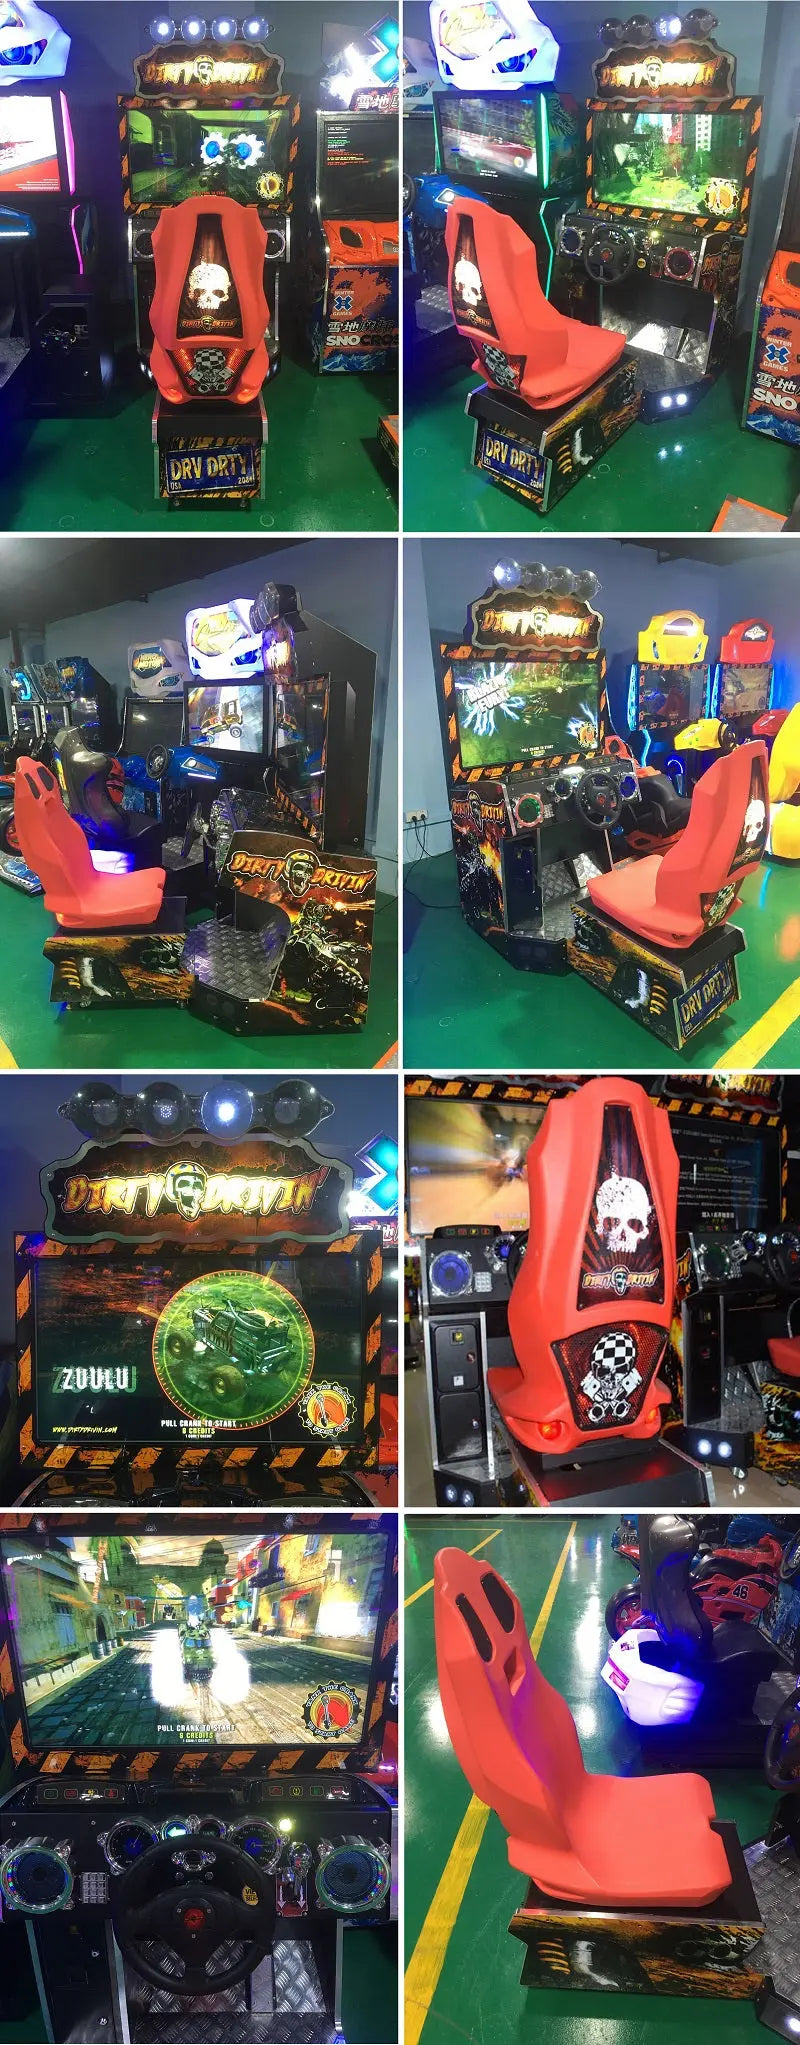 Dirty-Drivin-Racing-Driving-car-Simulator-Amusement-Coin-Operated-Arcade-games-Tomy-Arcade